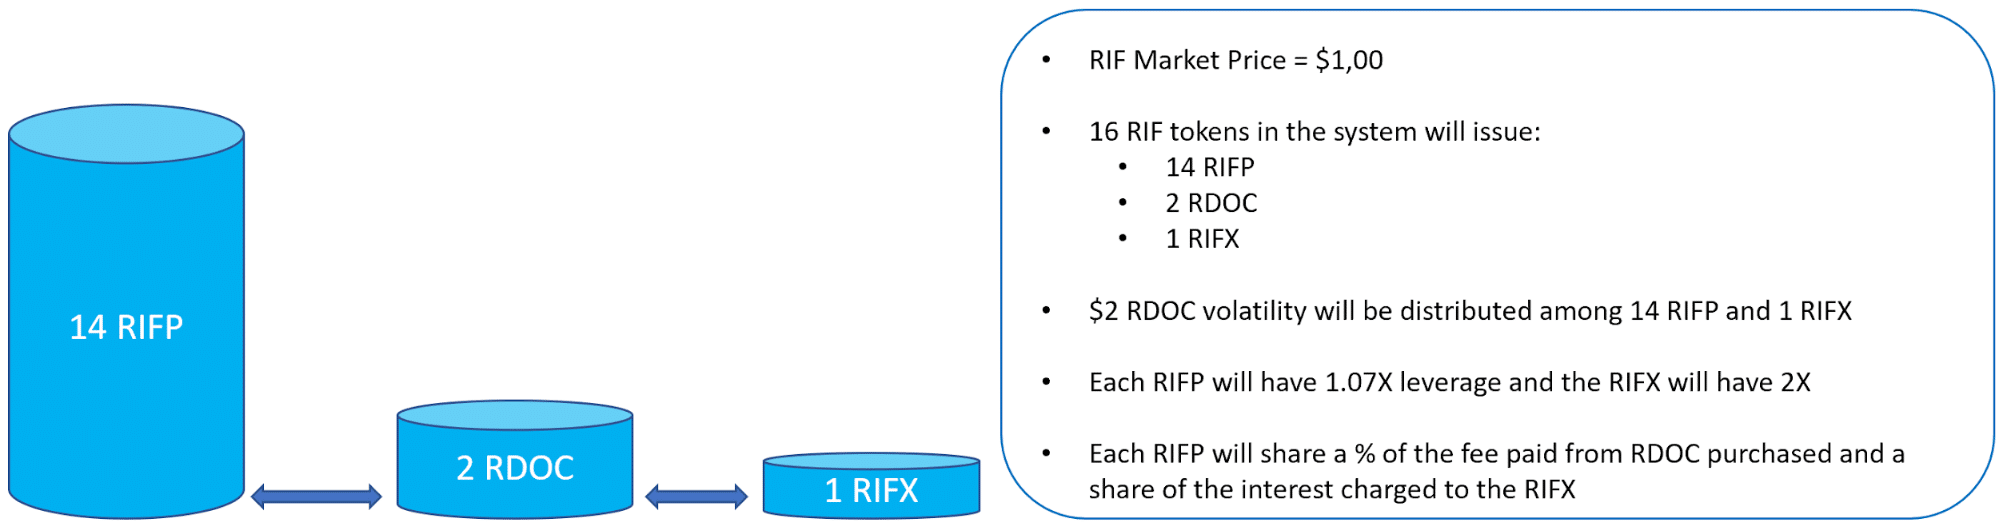 RIF on Chain Taps RSK Blockchain to Launch DeFi Platform - 4